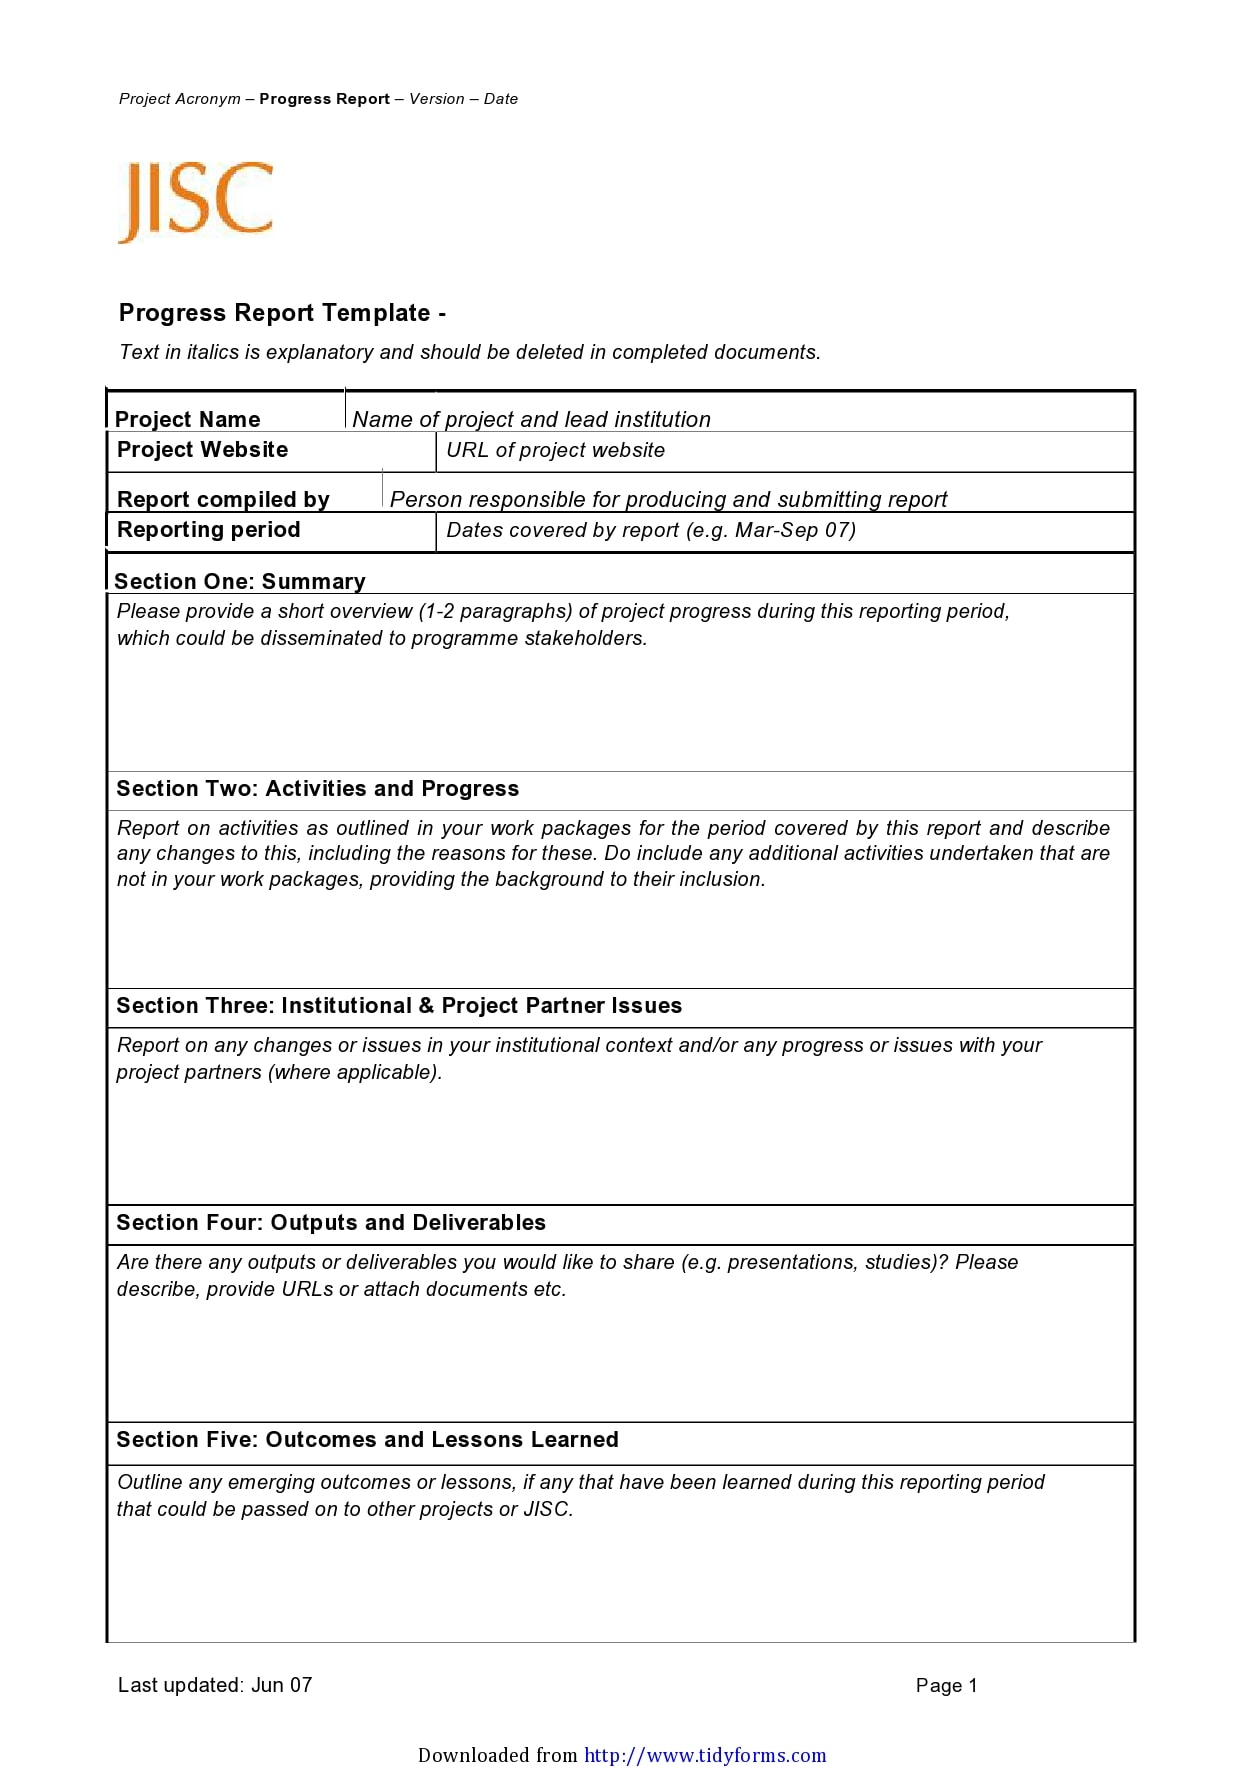 10 Professional Progress Report Templates (Free) - TemplateArchive With Regard To It Progress Report Template